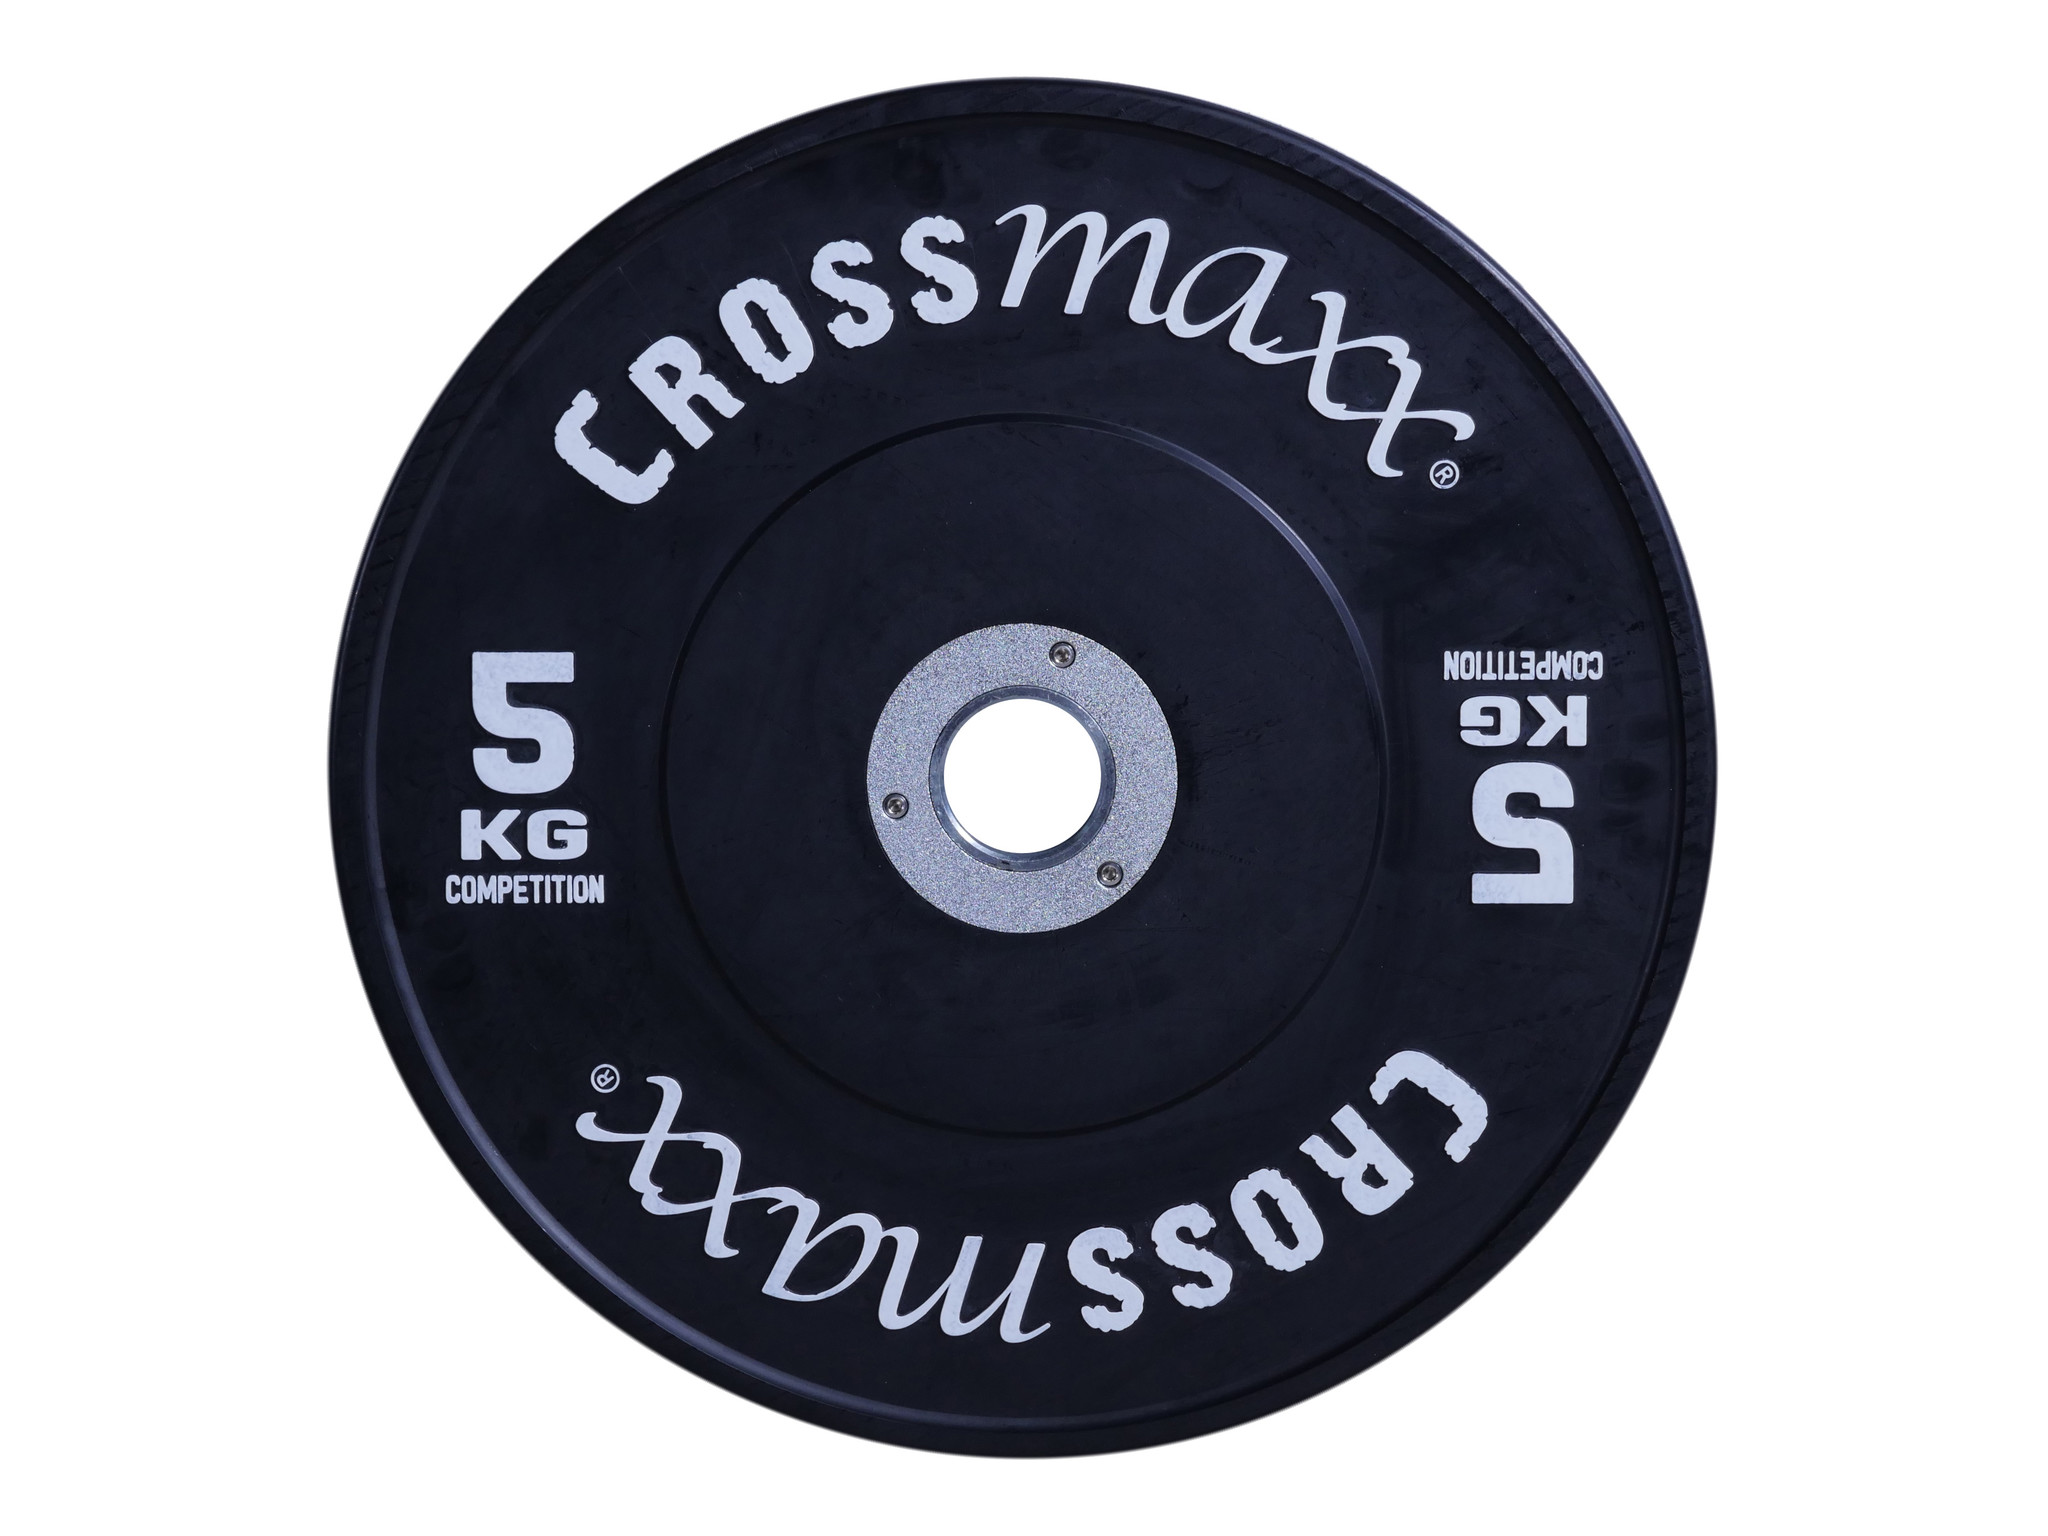 Crossmaxx Competition Bumper Plate 5 kg Black - Demo